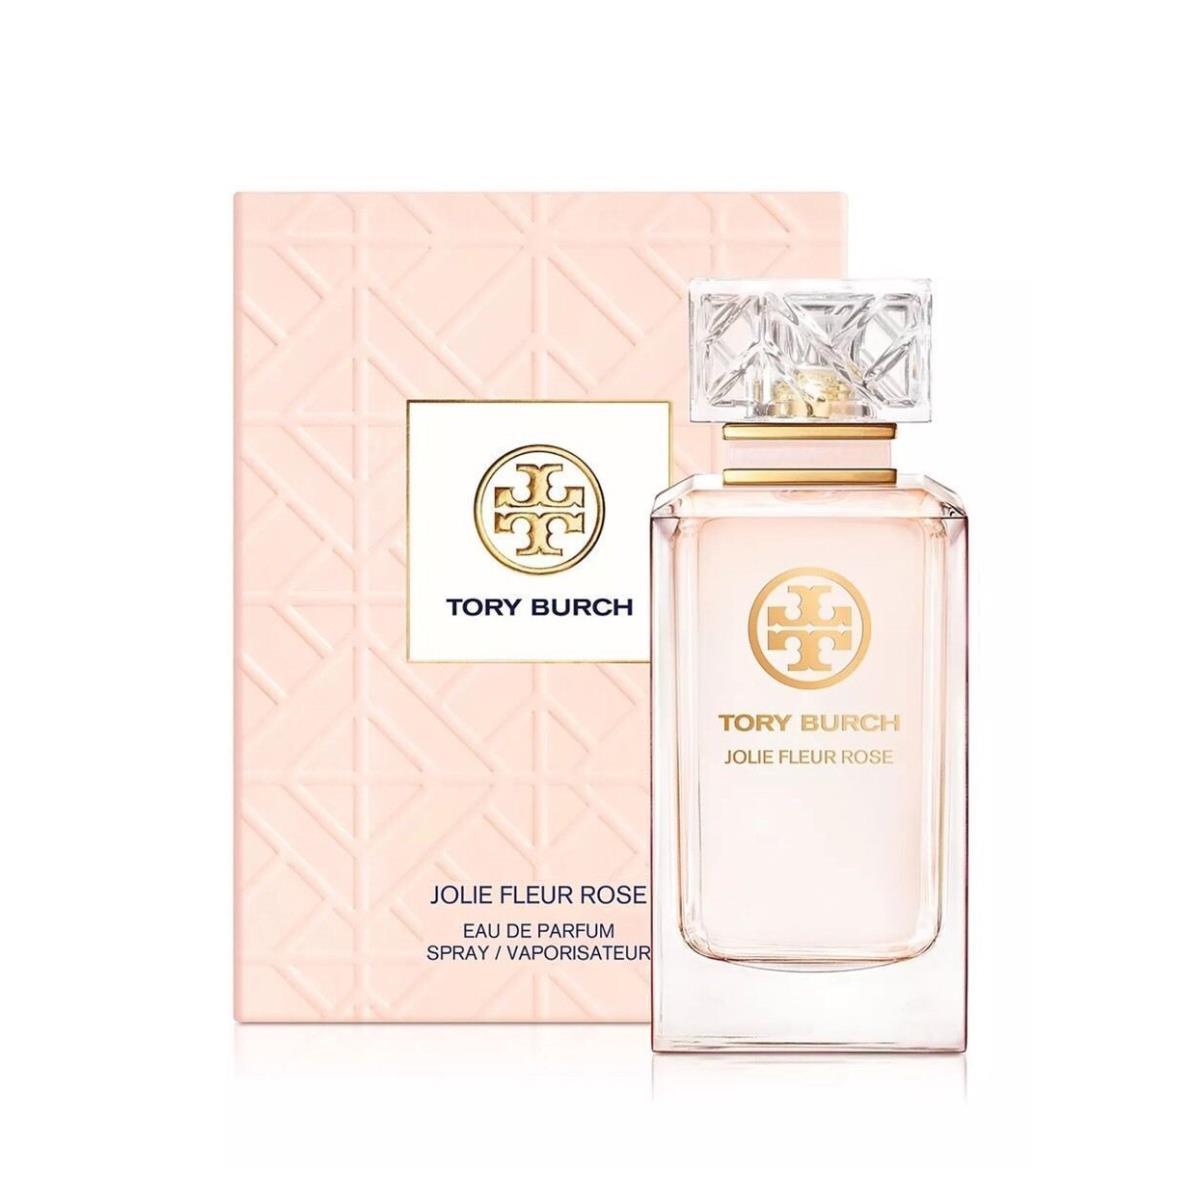 Tory Burch Jolie Fleur Rose Eau de Parfum Perfume Spray 3.4oz Womens Scent